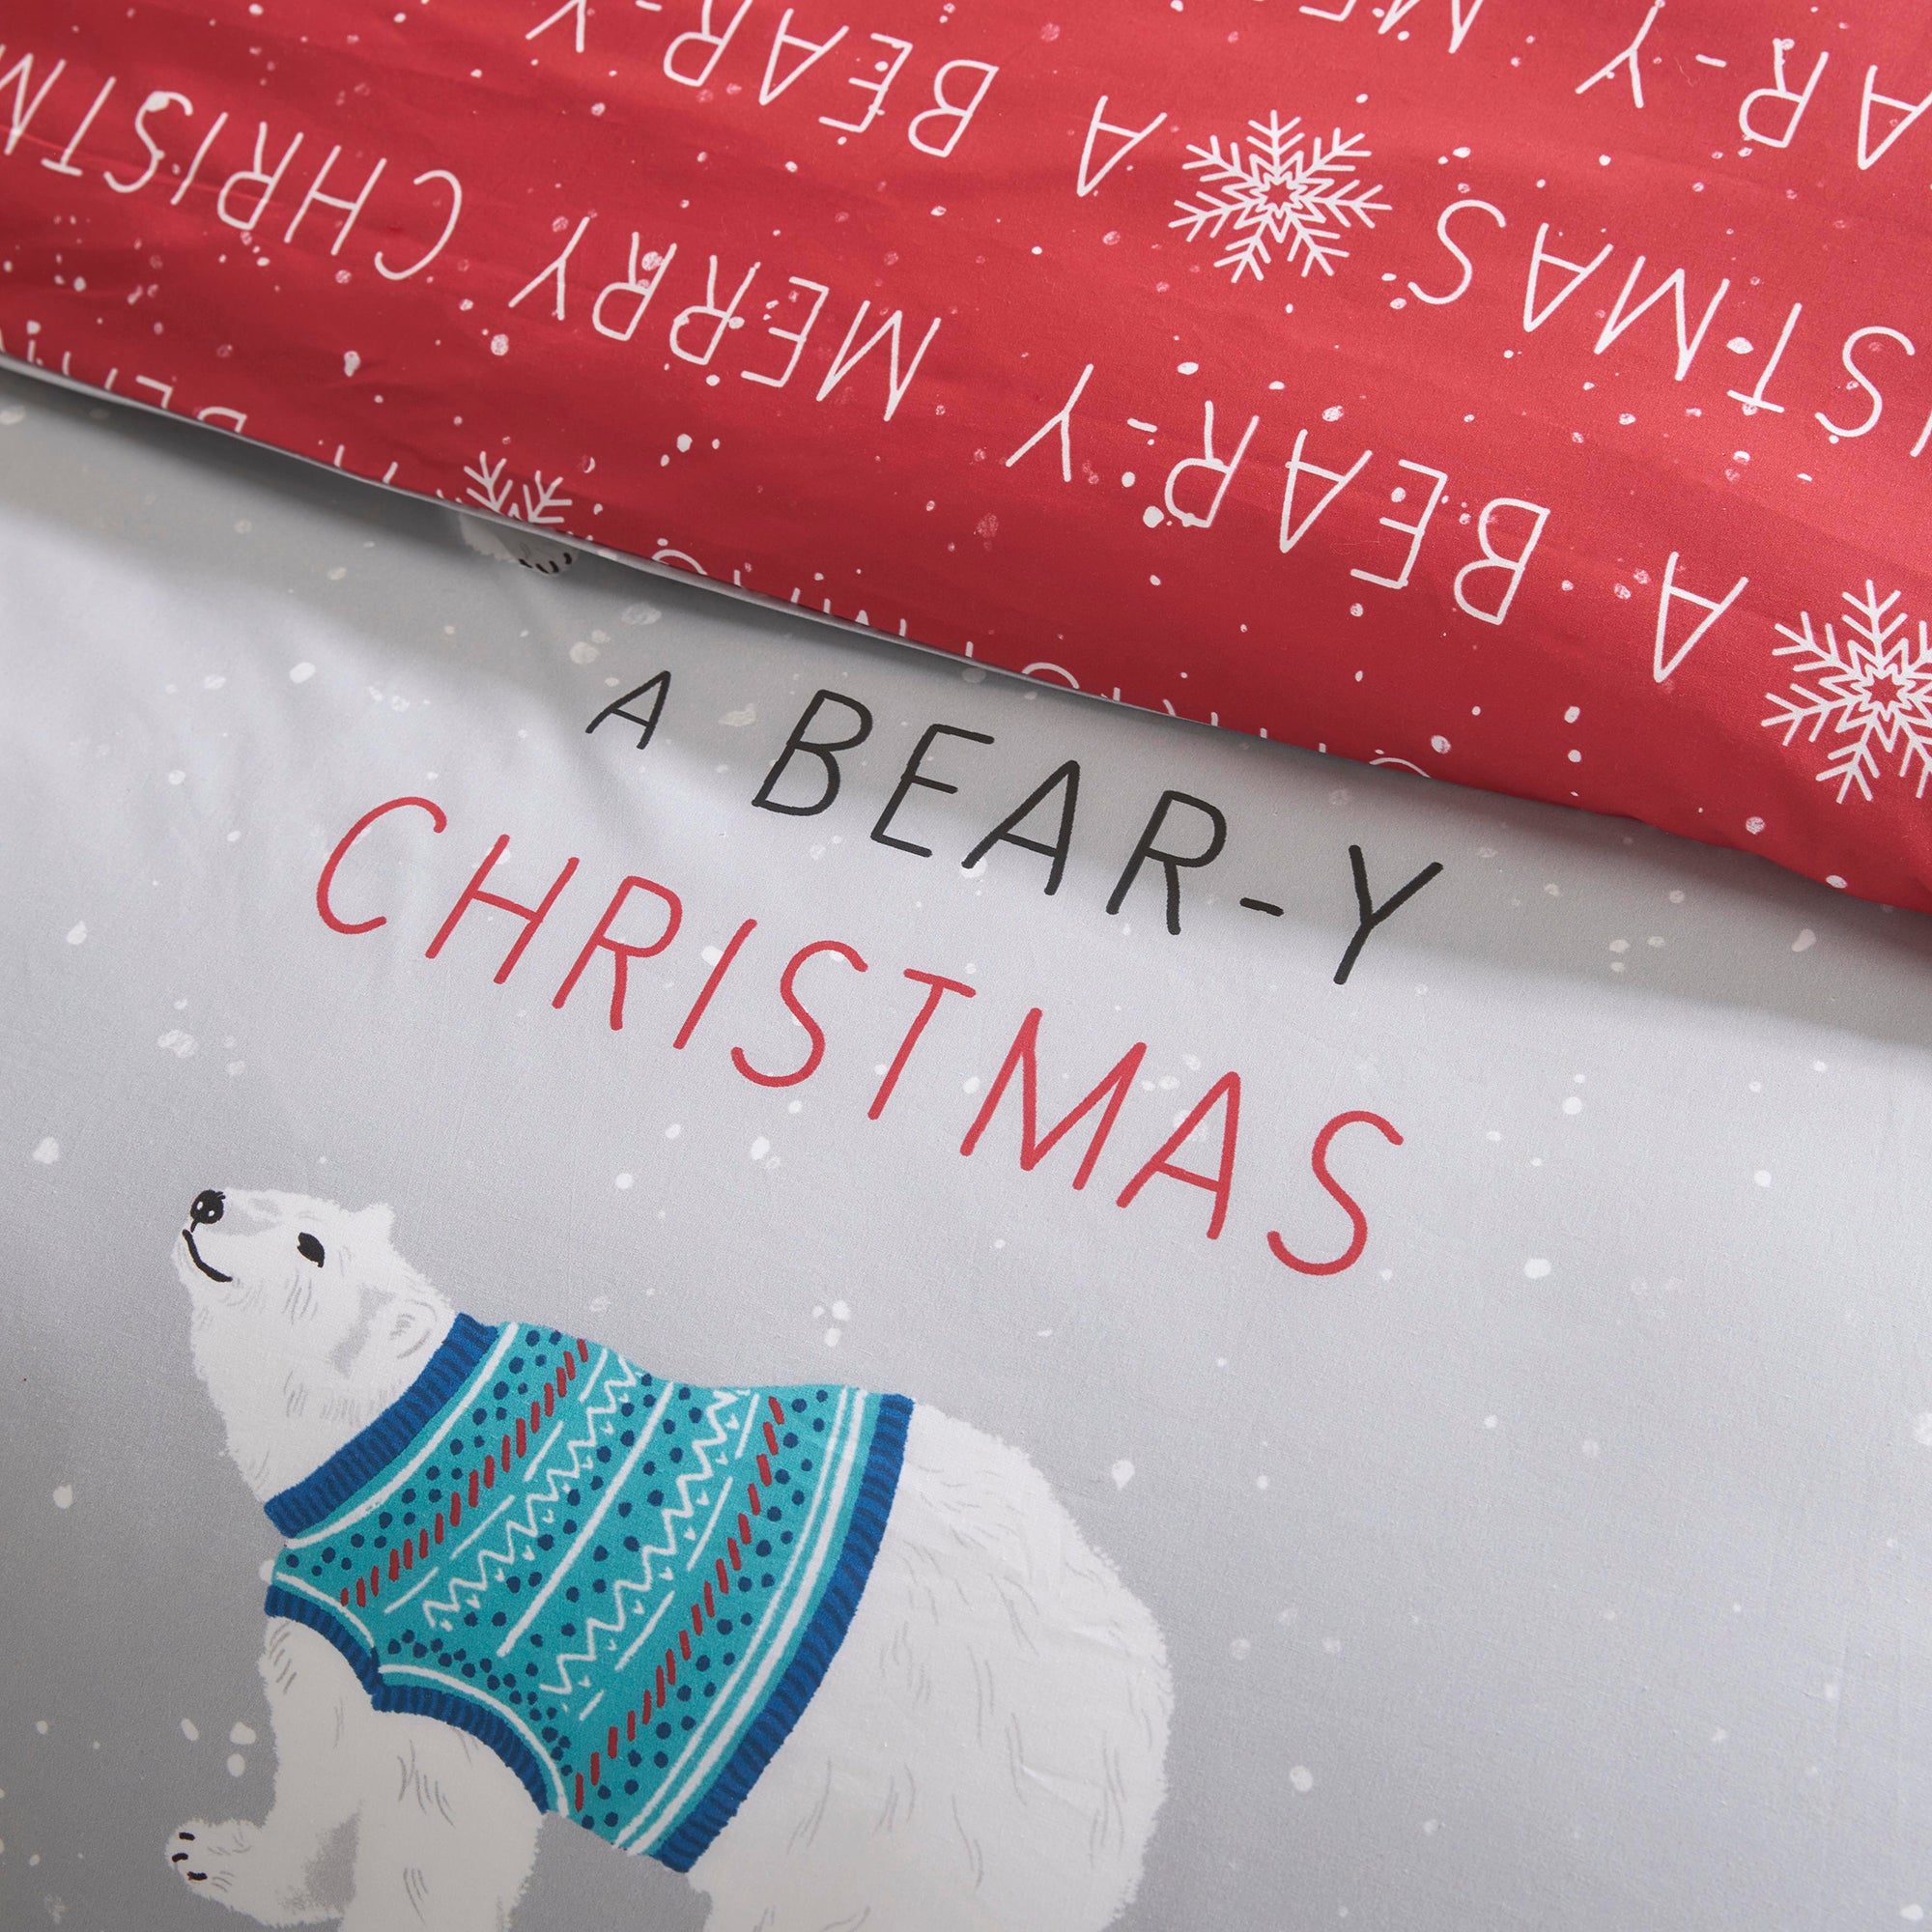 Polar Bears - Easy Care Duvet Cover Set in Silver - By Bedlam Christmas